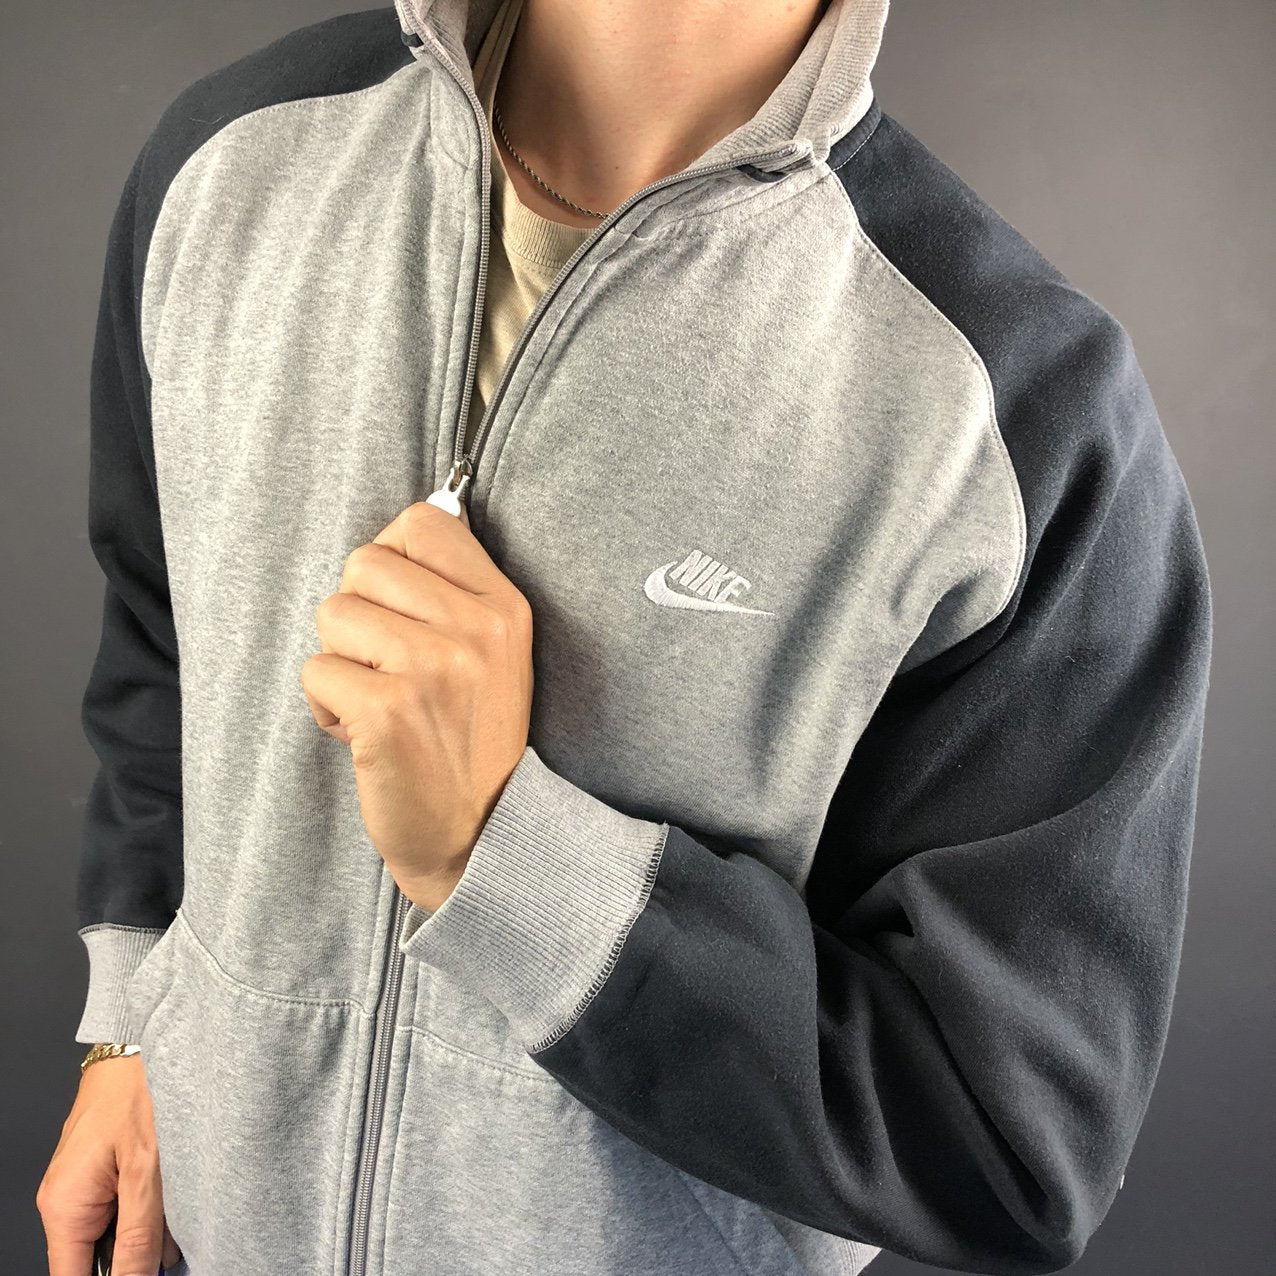 Vintage Nike Zip Up Sweatshirt with Embroidered Swoosh - Large - Vintique Clothing